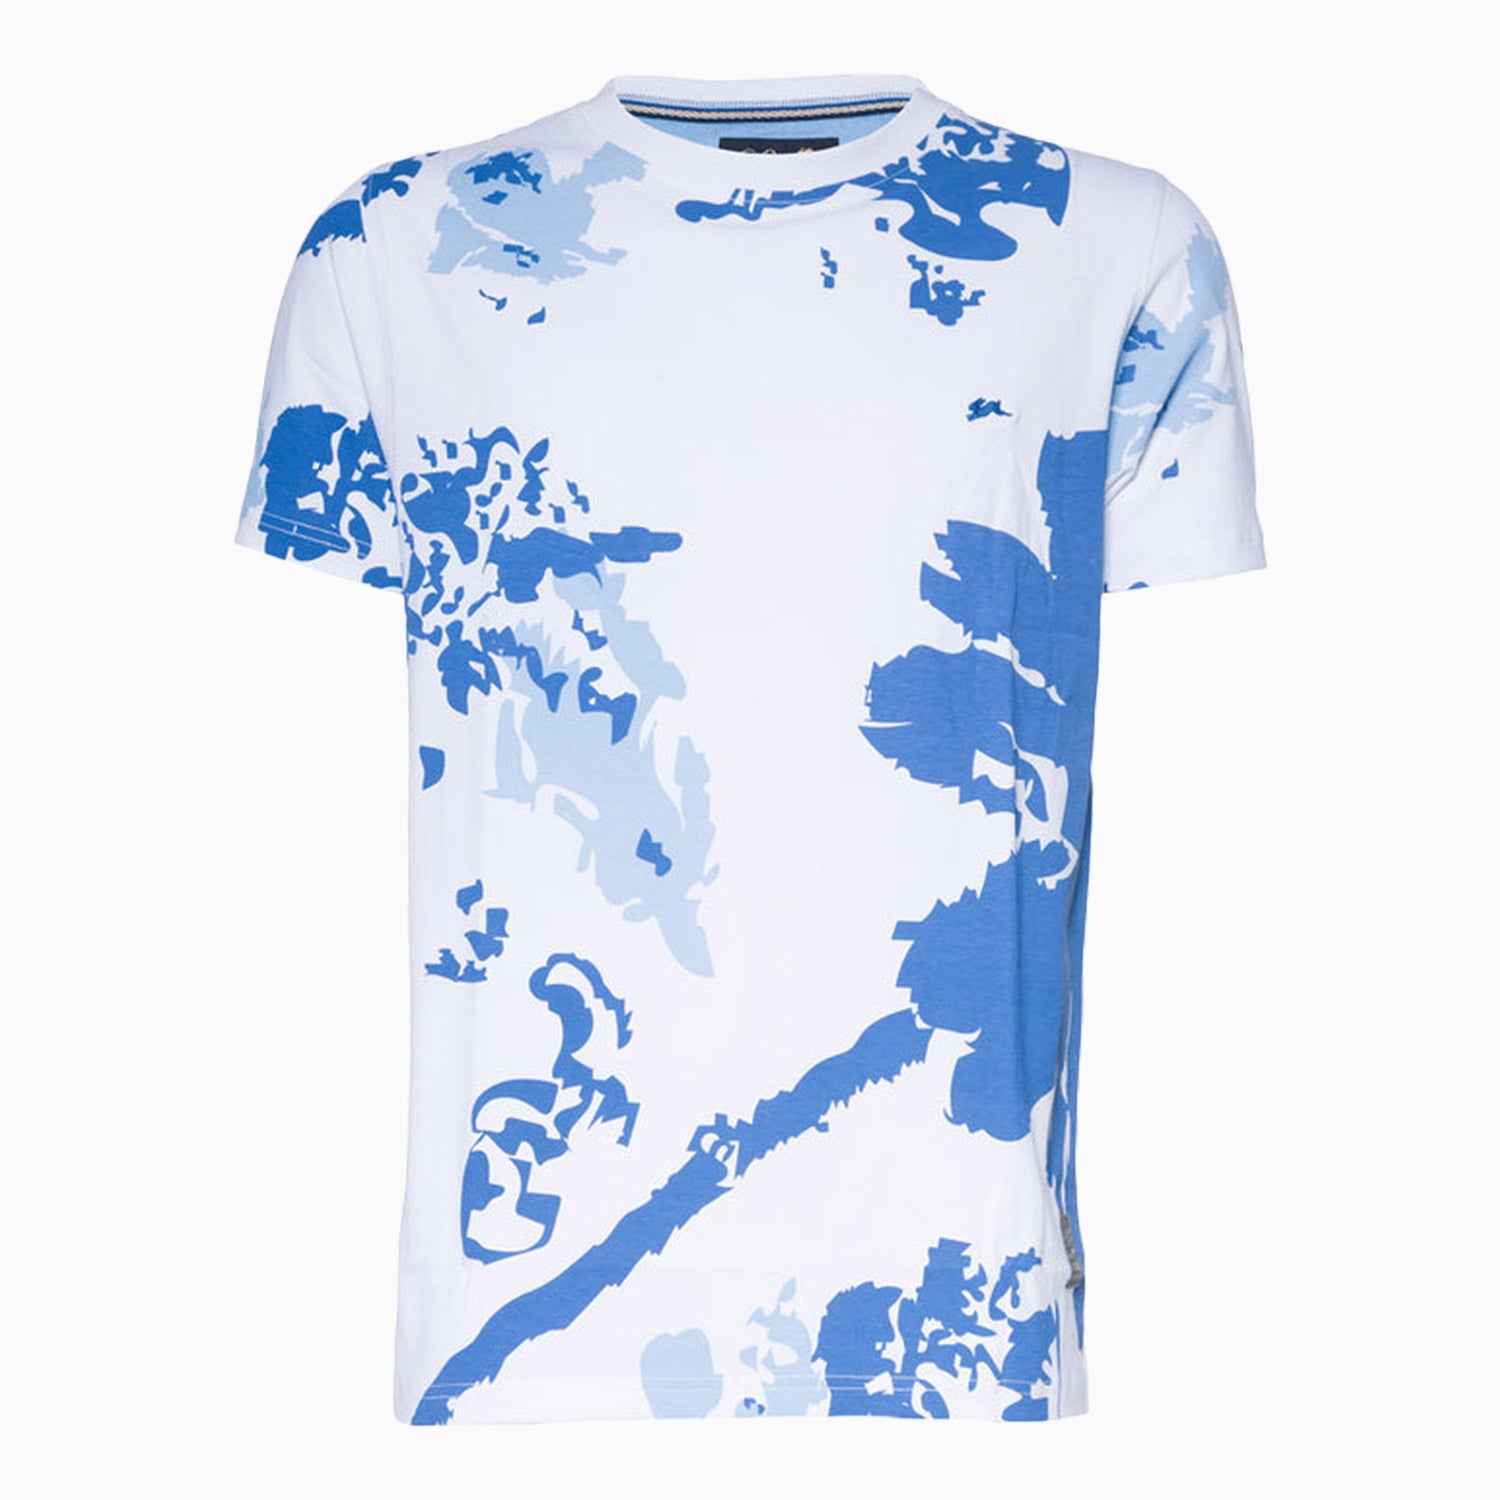 a-tiziano-mens-onyx-graphic-print-short-sleeve-t-shirt-41atm4325-wht